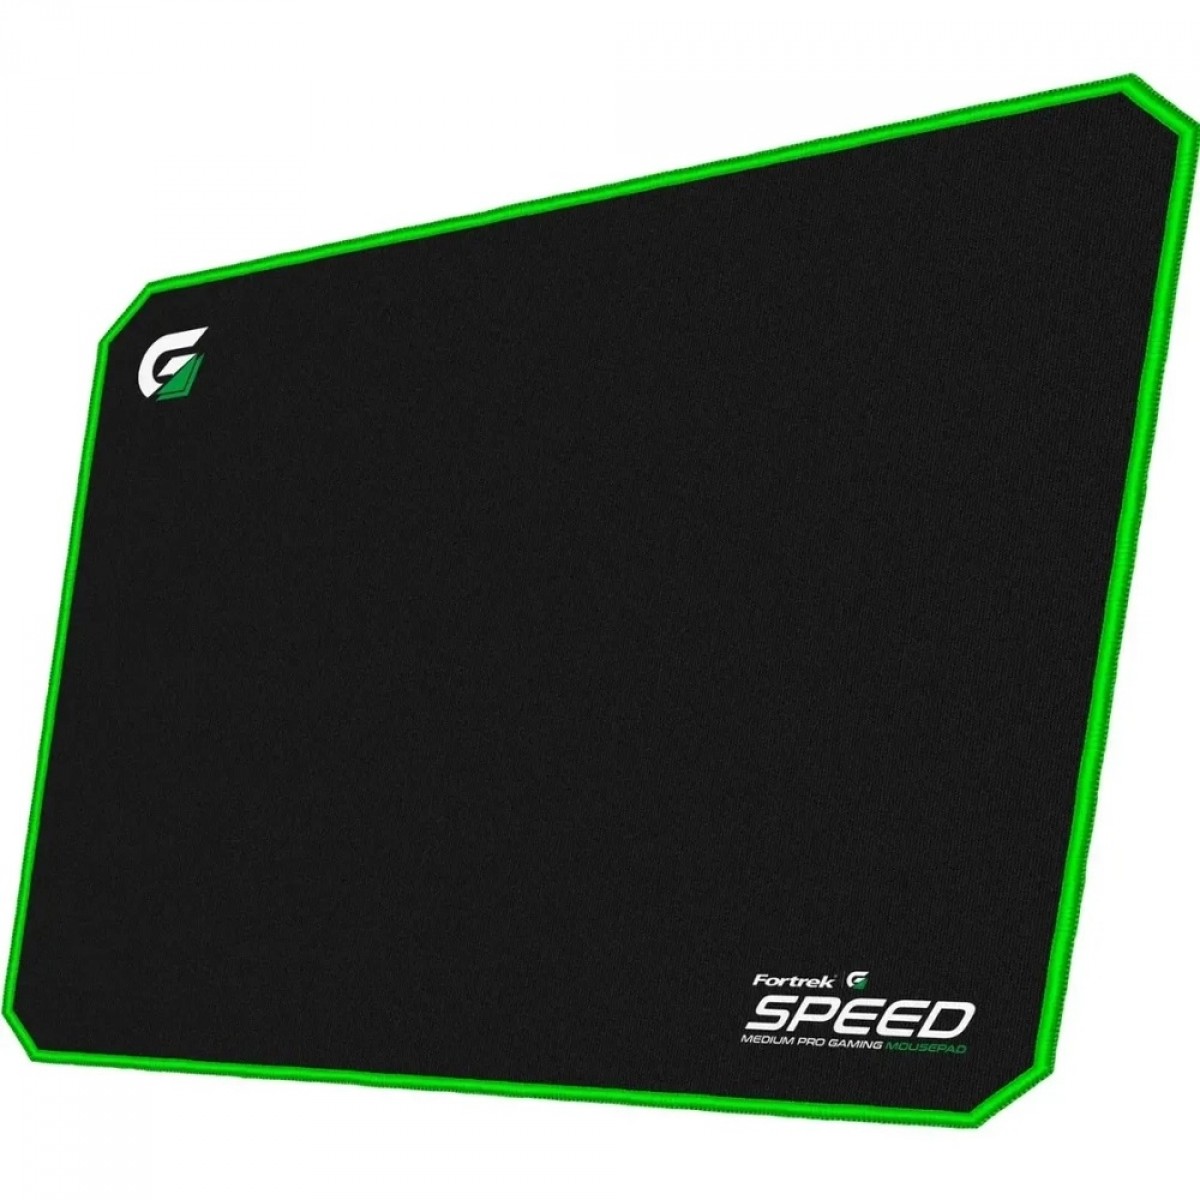 Mouse Pad Gamer Fortrek Speed MPG101 VD, Médio (320x240mm), Preto/Verde - 72691